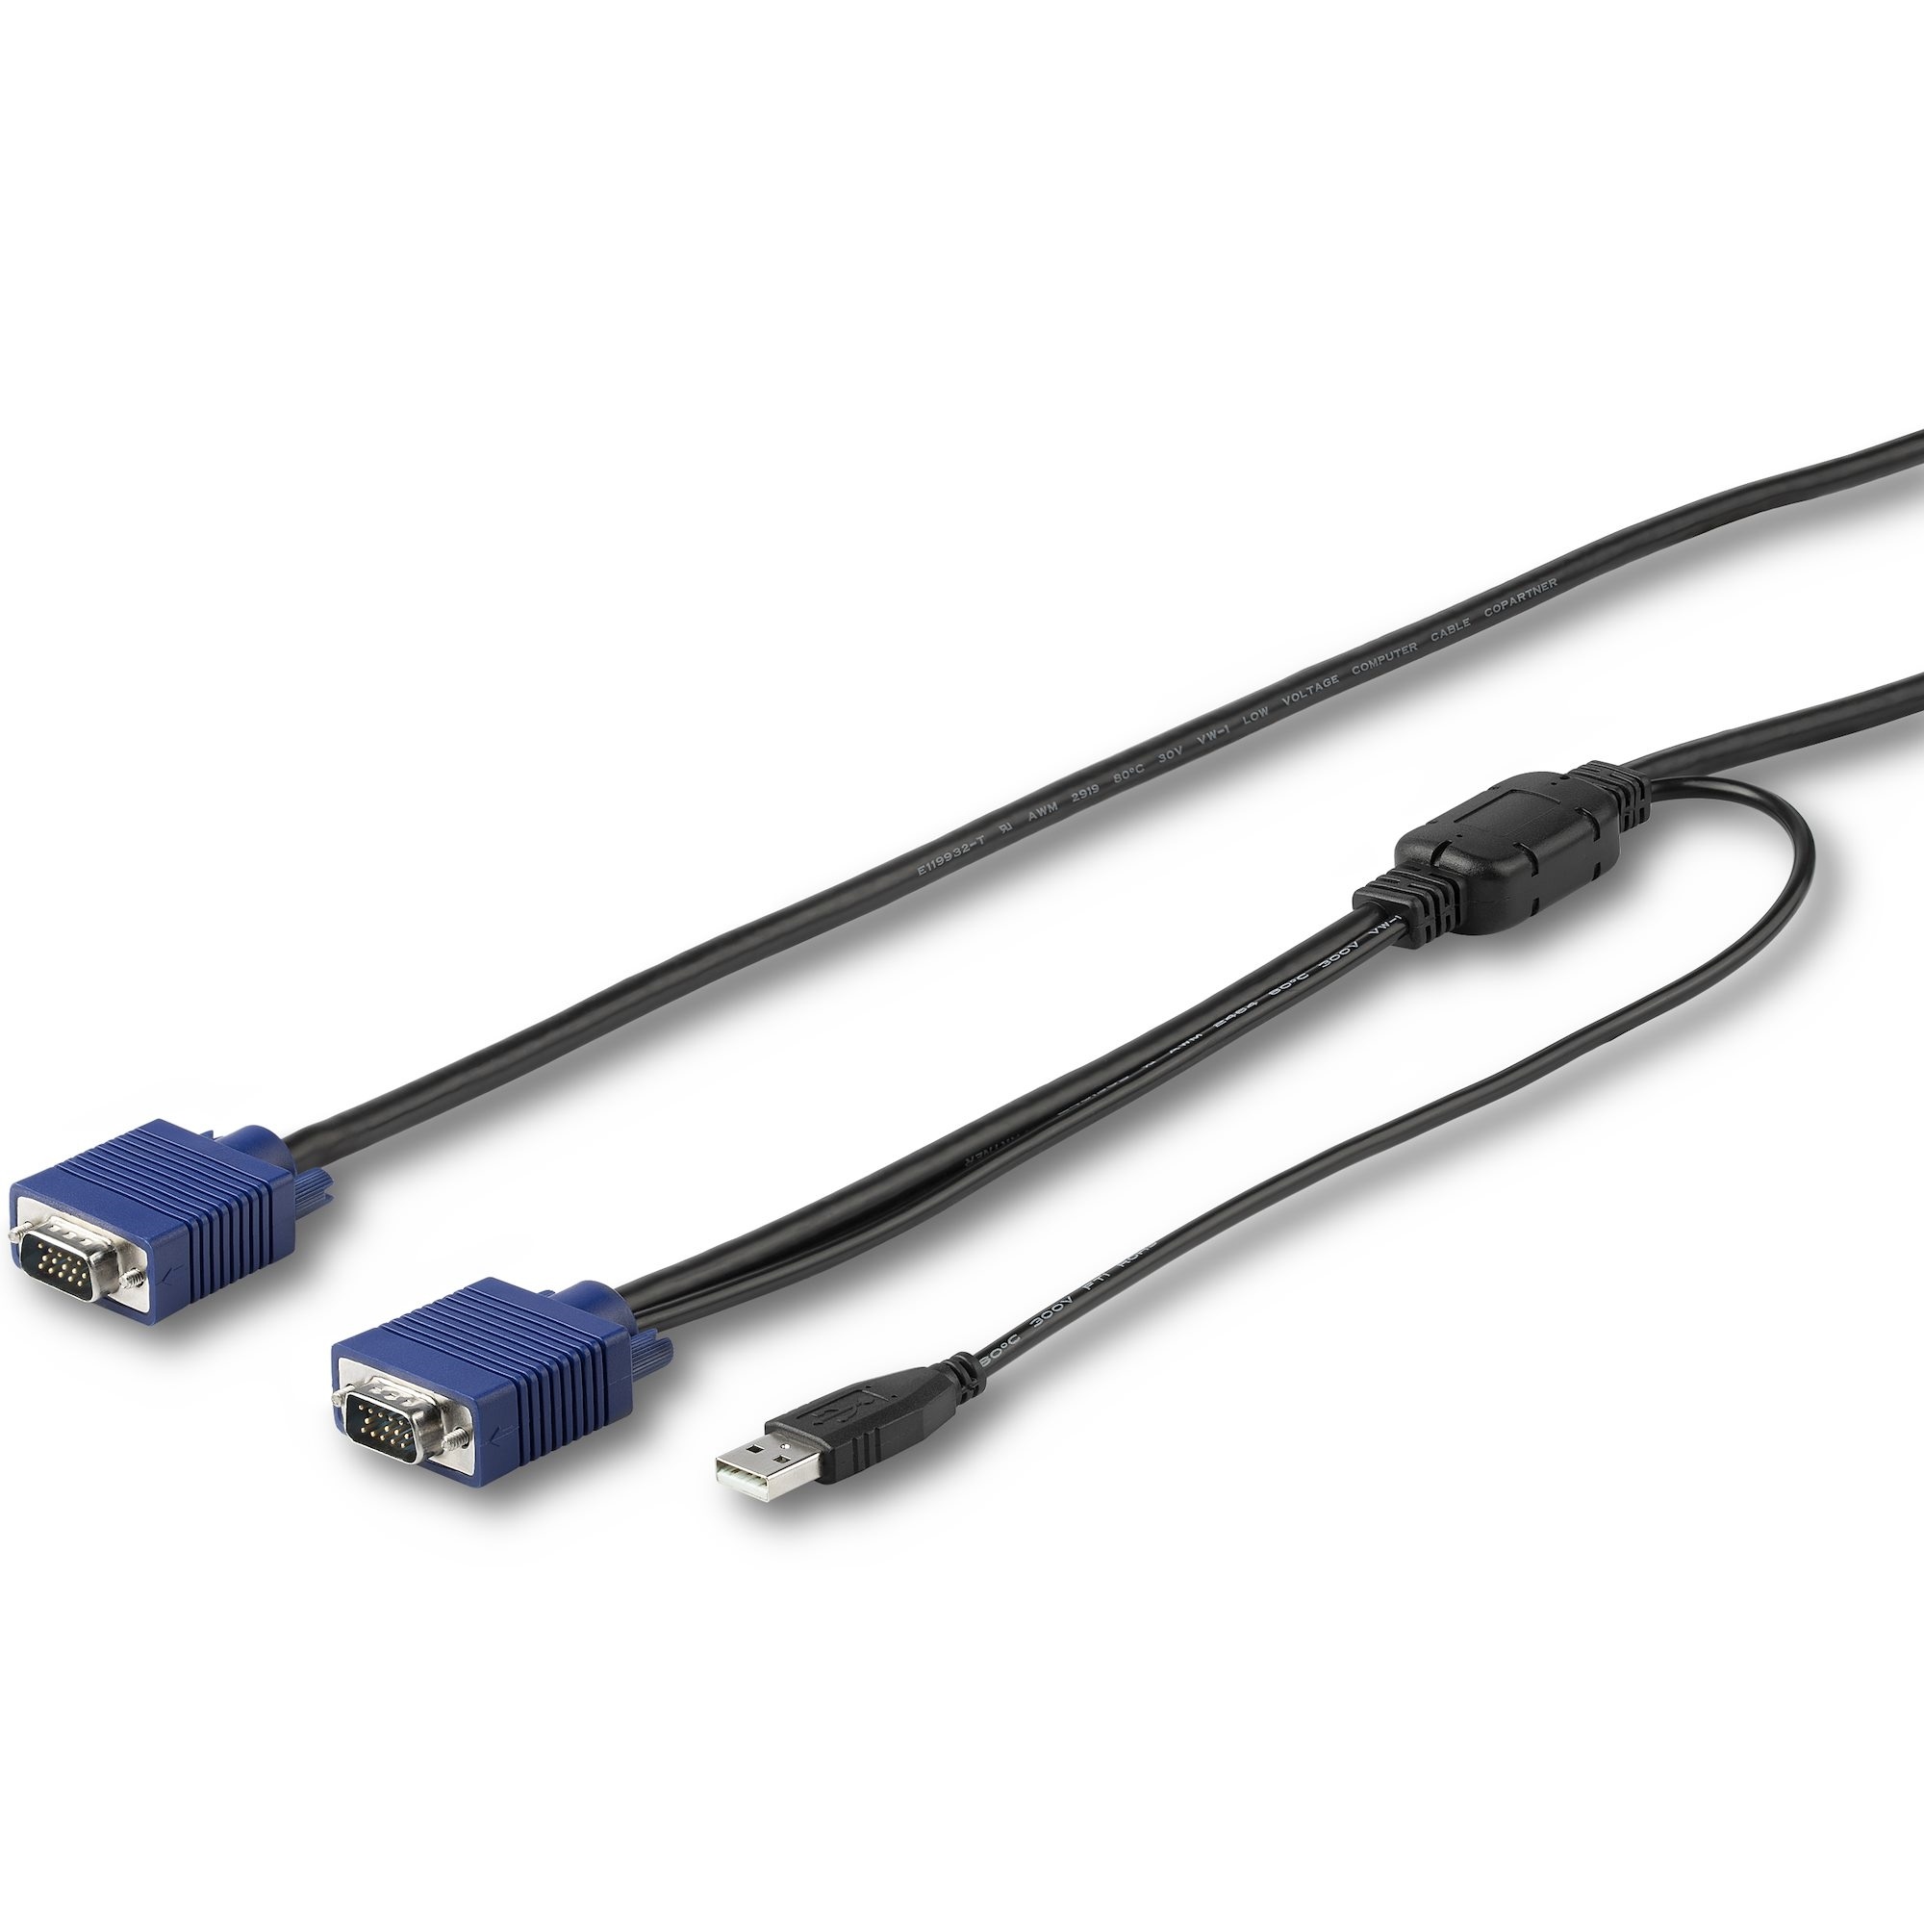 Startech USB KVM Cable for StarTech.com Rackmount Consoles (1.8m)